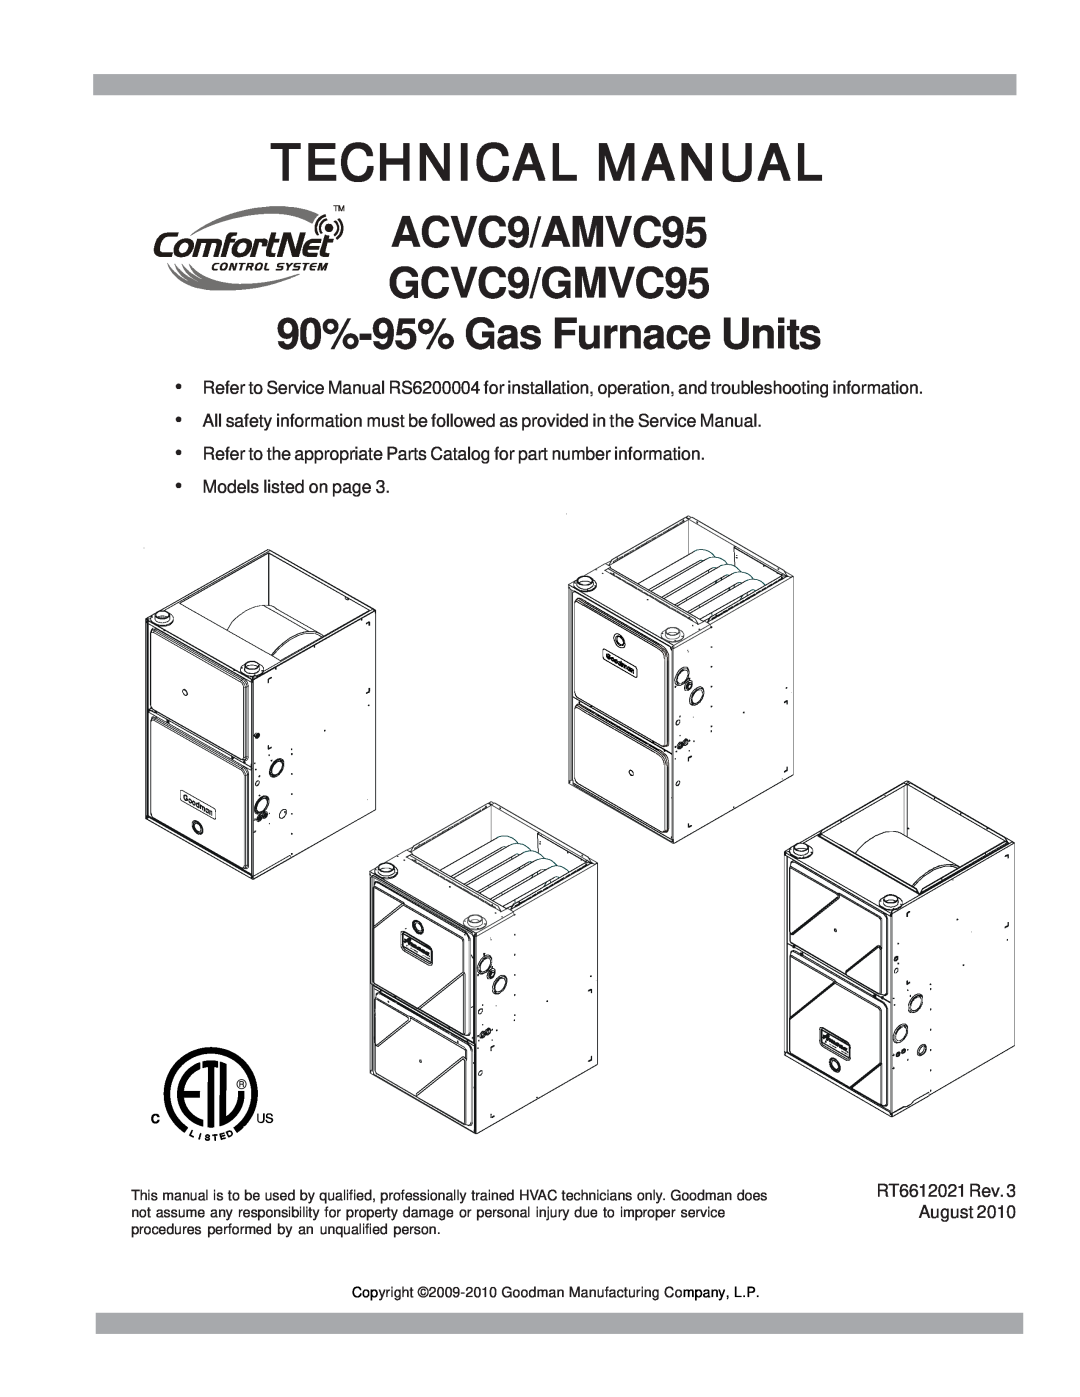 Goodman Mfg service manual Technical Manual, TMACVC9/AMVC95 GCVC9/GMVC95, 90%-95%Gas Furnace Units 